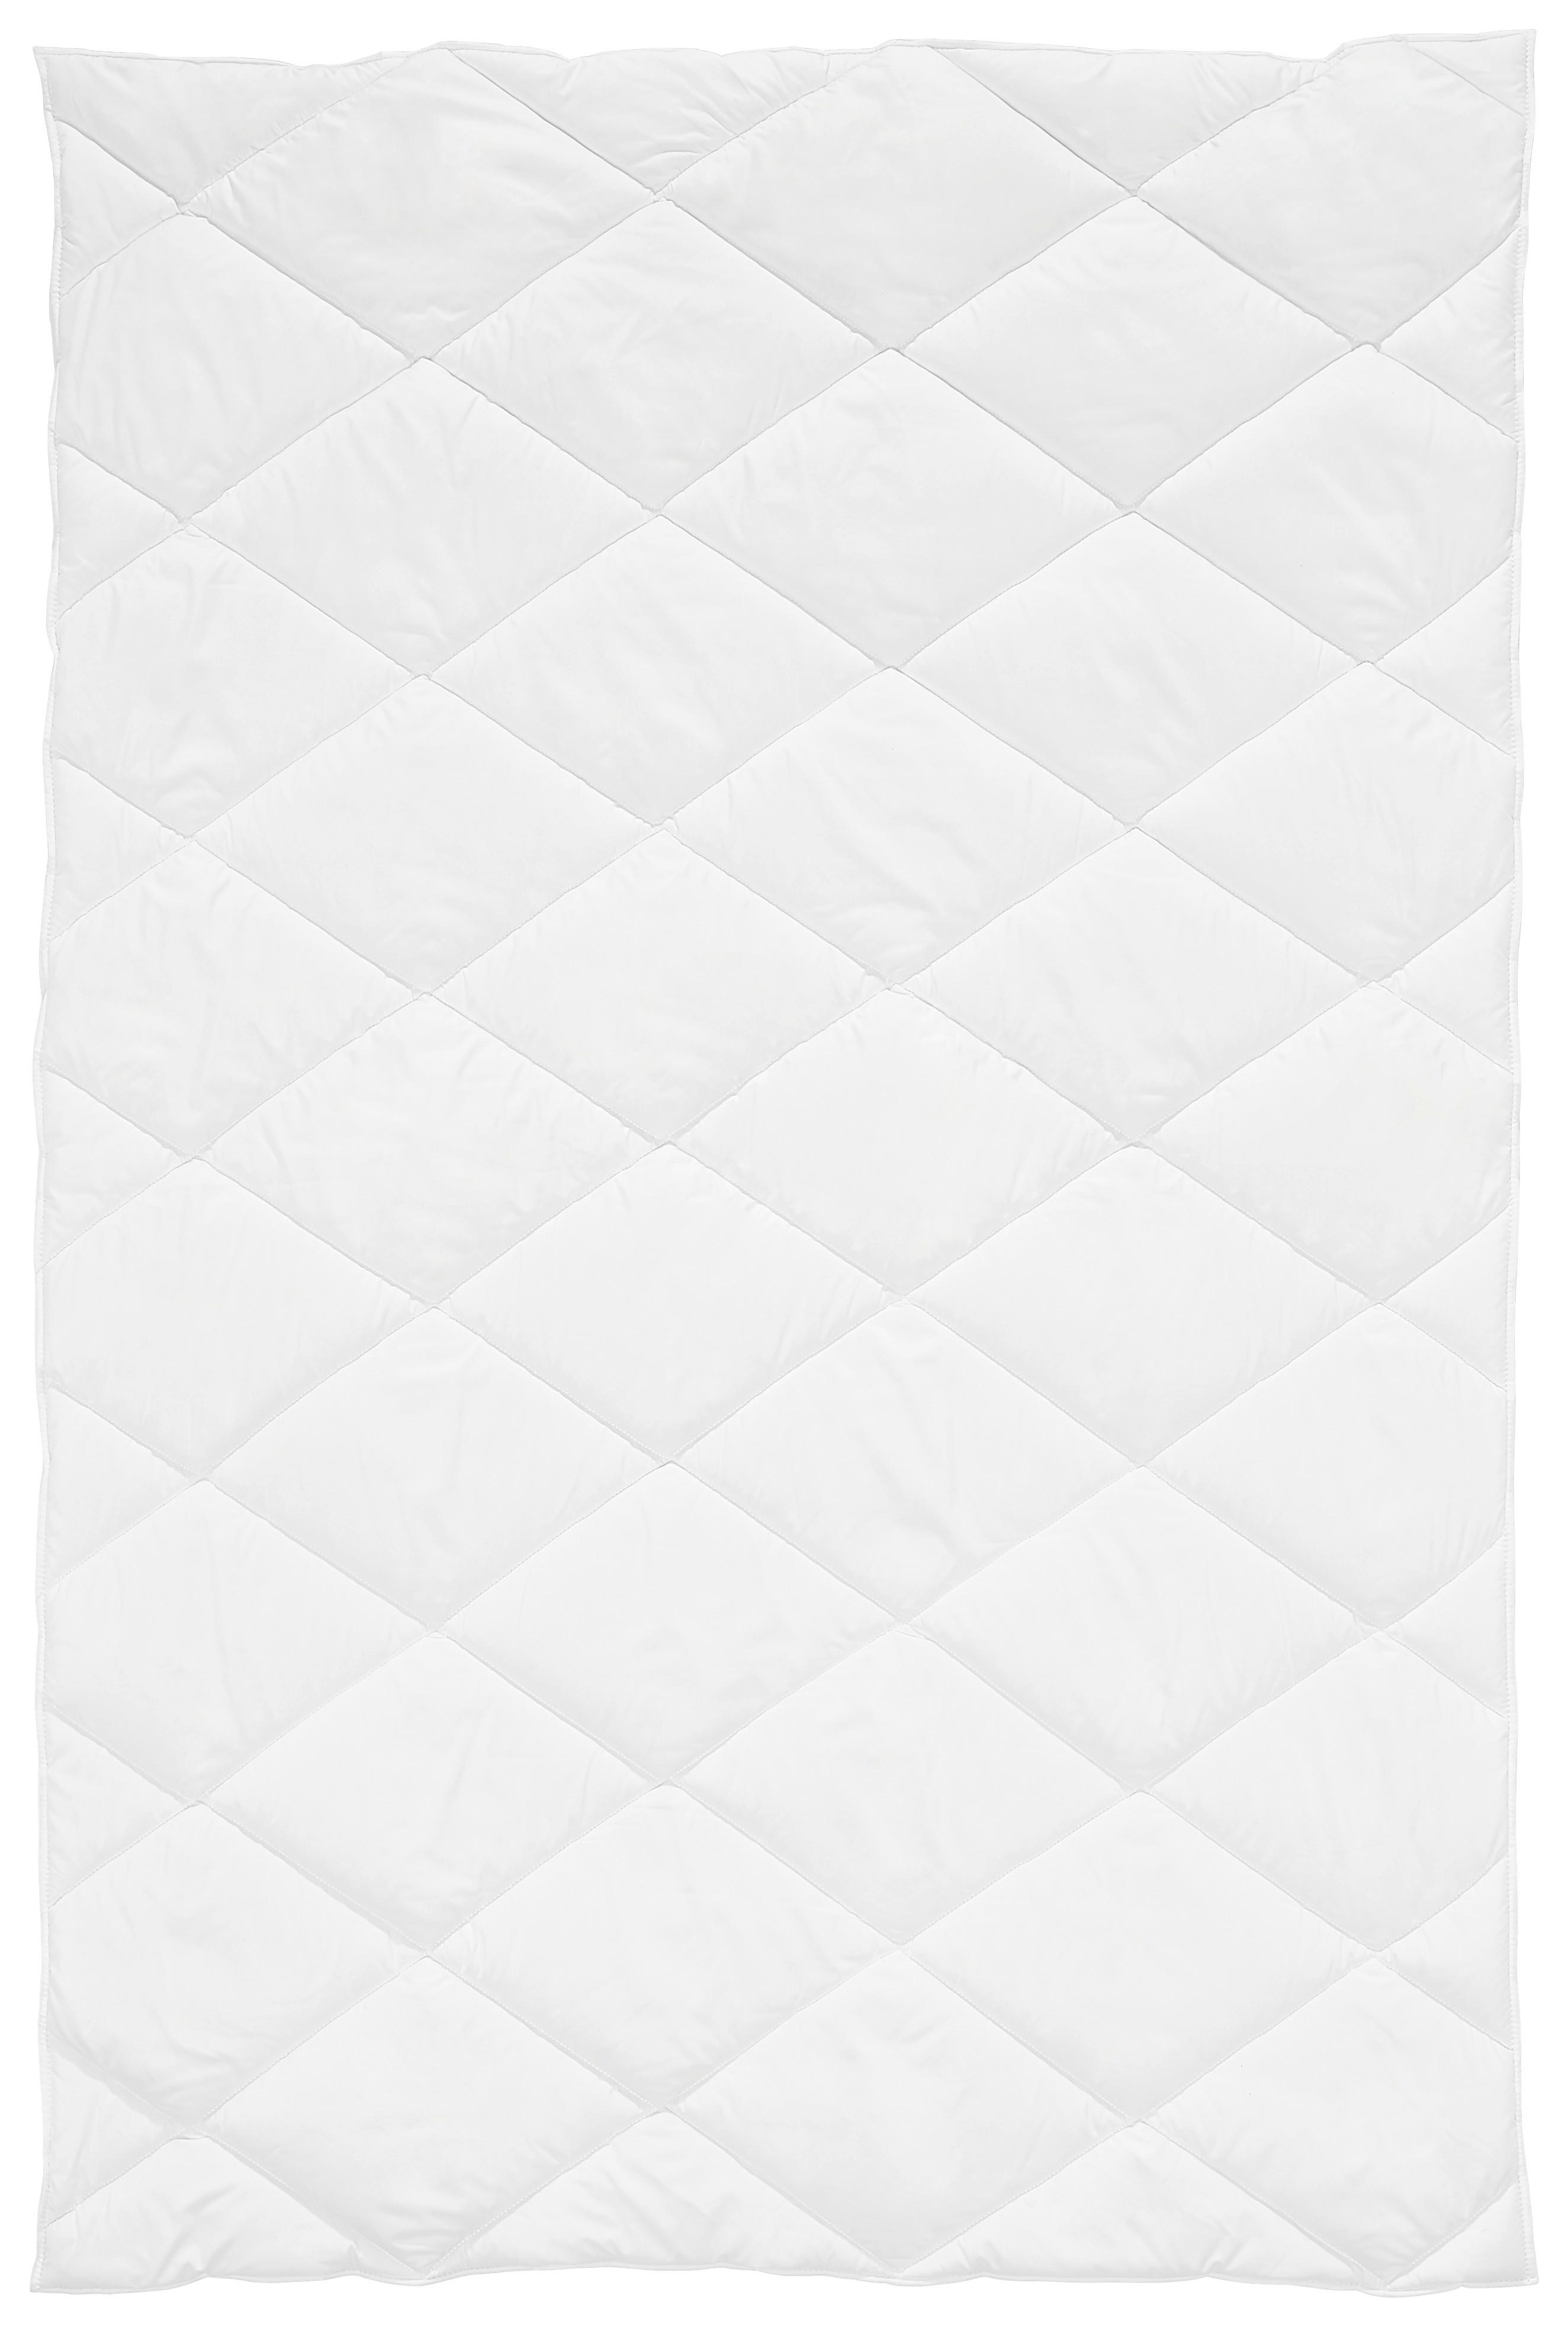 WINTERBETT  Oviedo  155/220 cm   - Weiß, Basics, Textil (155/220cm) - Sleeptex